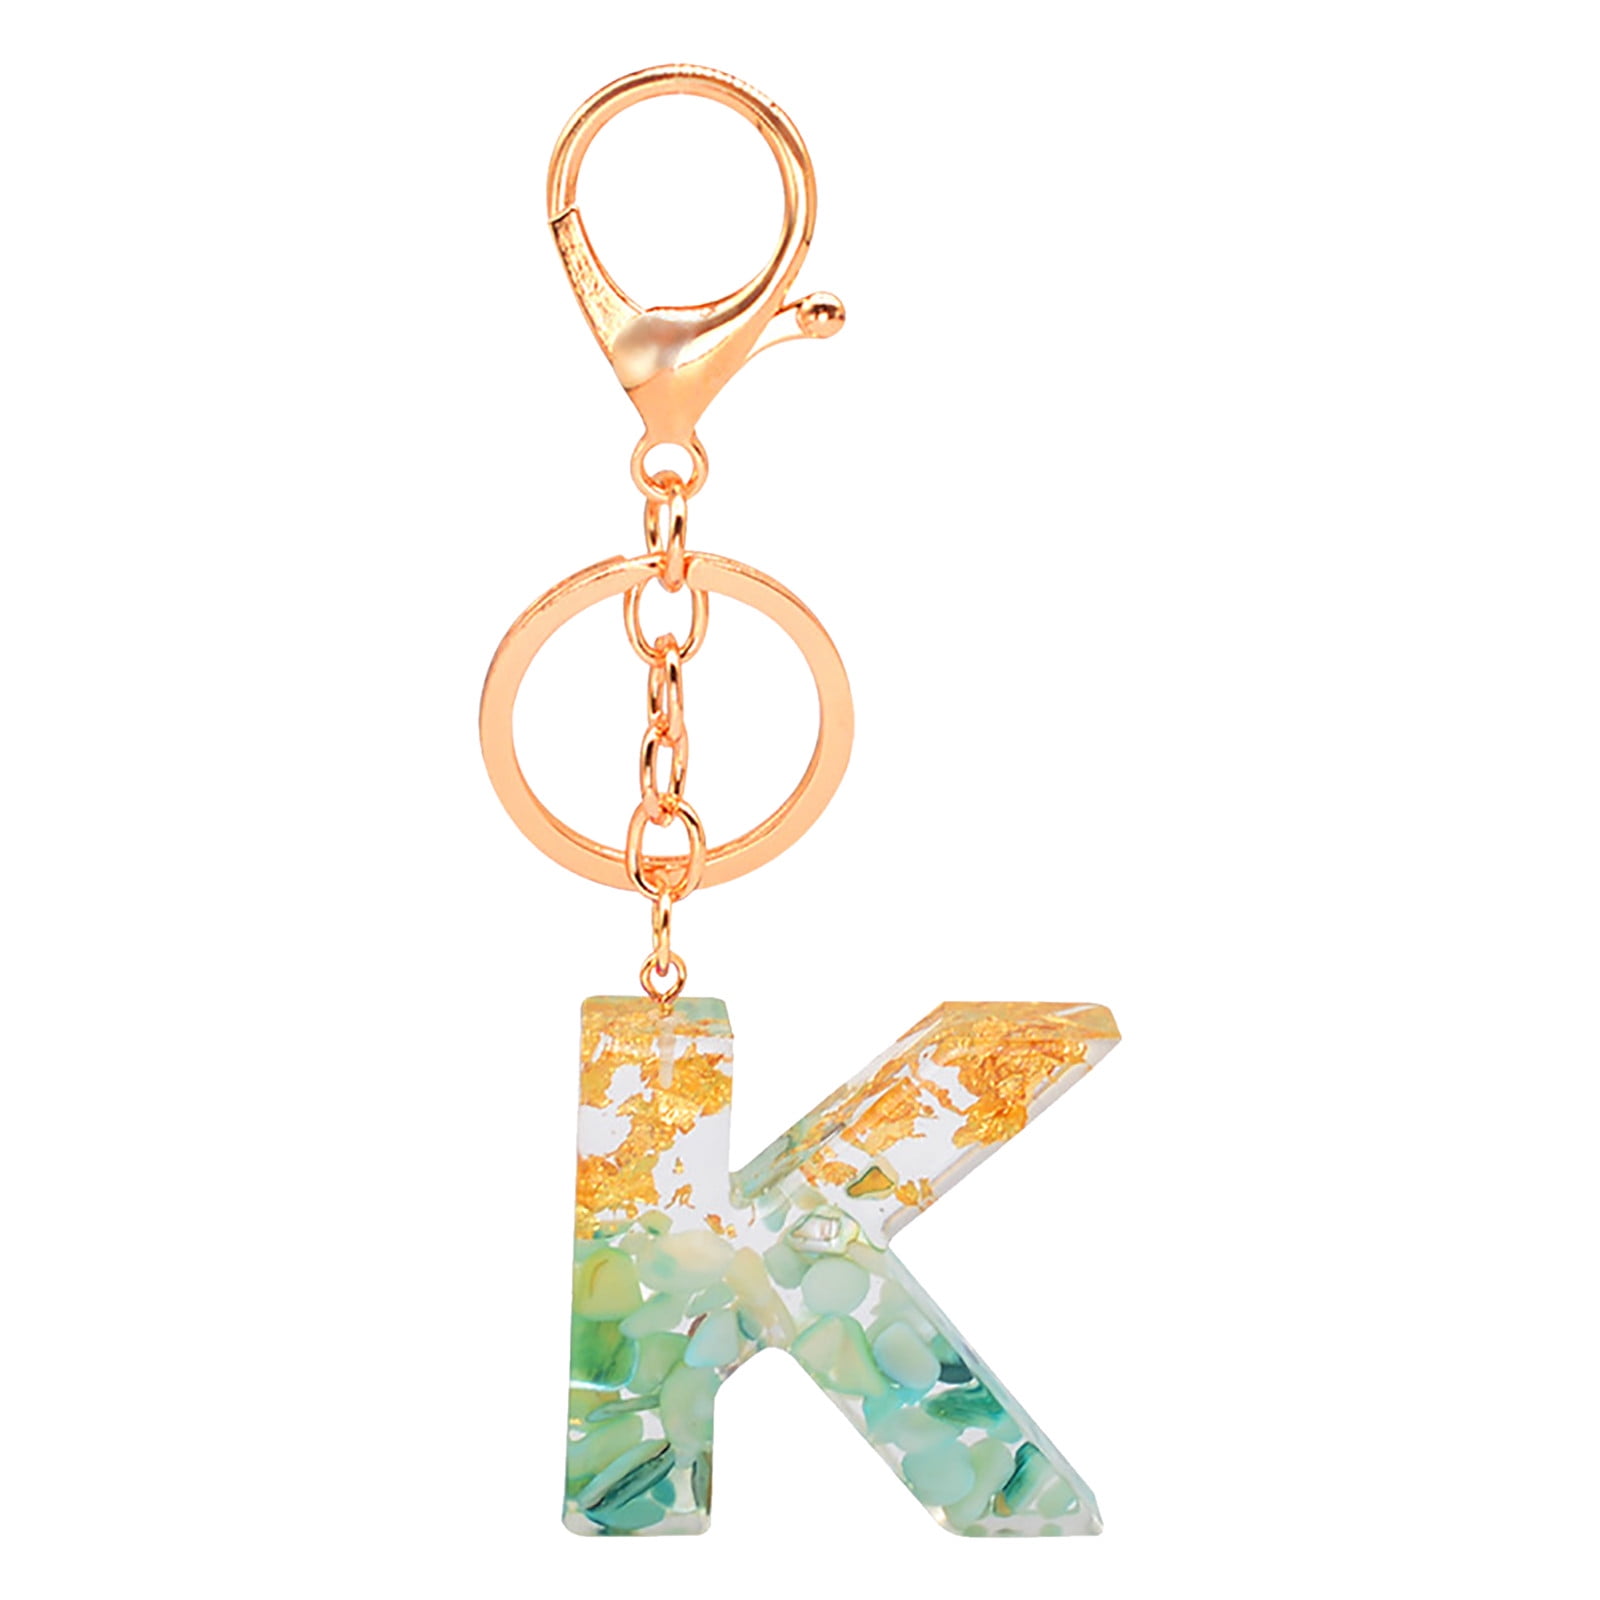 Trinket Engraved Keyring Letter Key Chain Unisex Delicate Jewelry Key Holder LI 